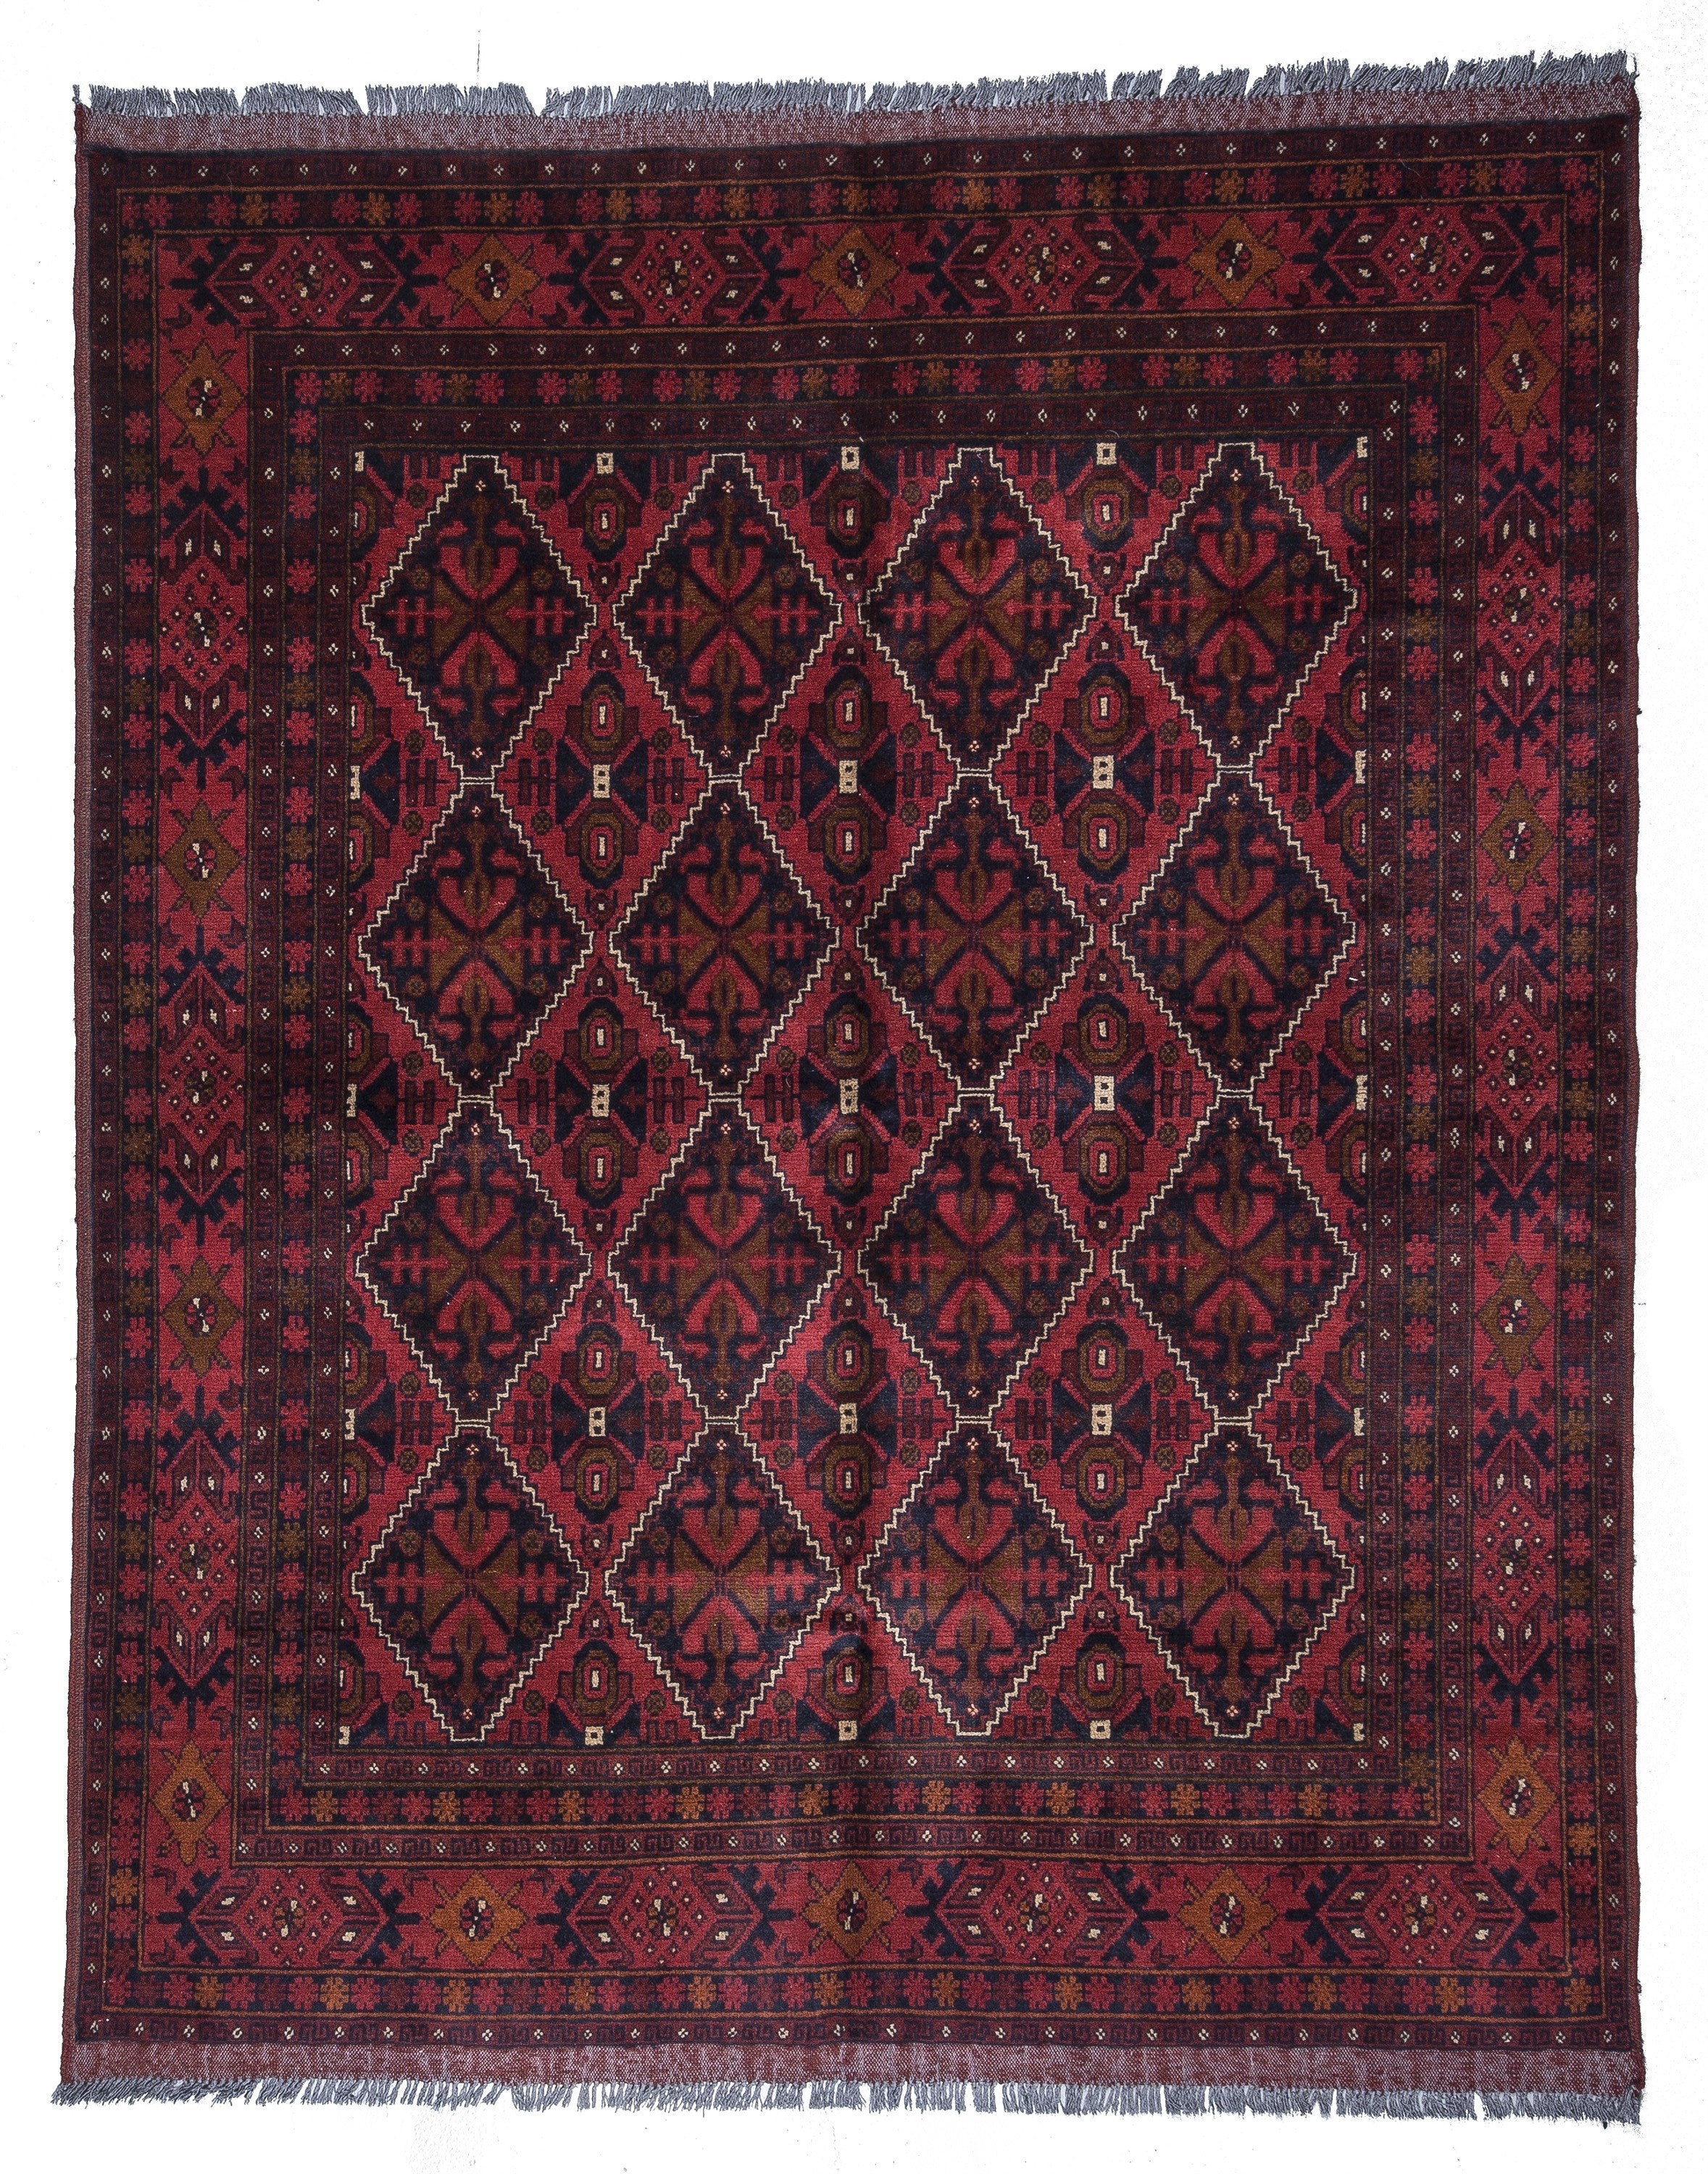 Red and Blue Afghan Khal Mohammadi Rug, Vintage Turkish Handmade Natural Wool Carpet 6'4''x''5''